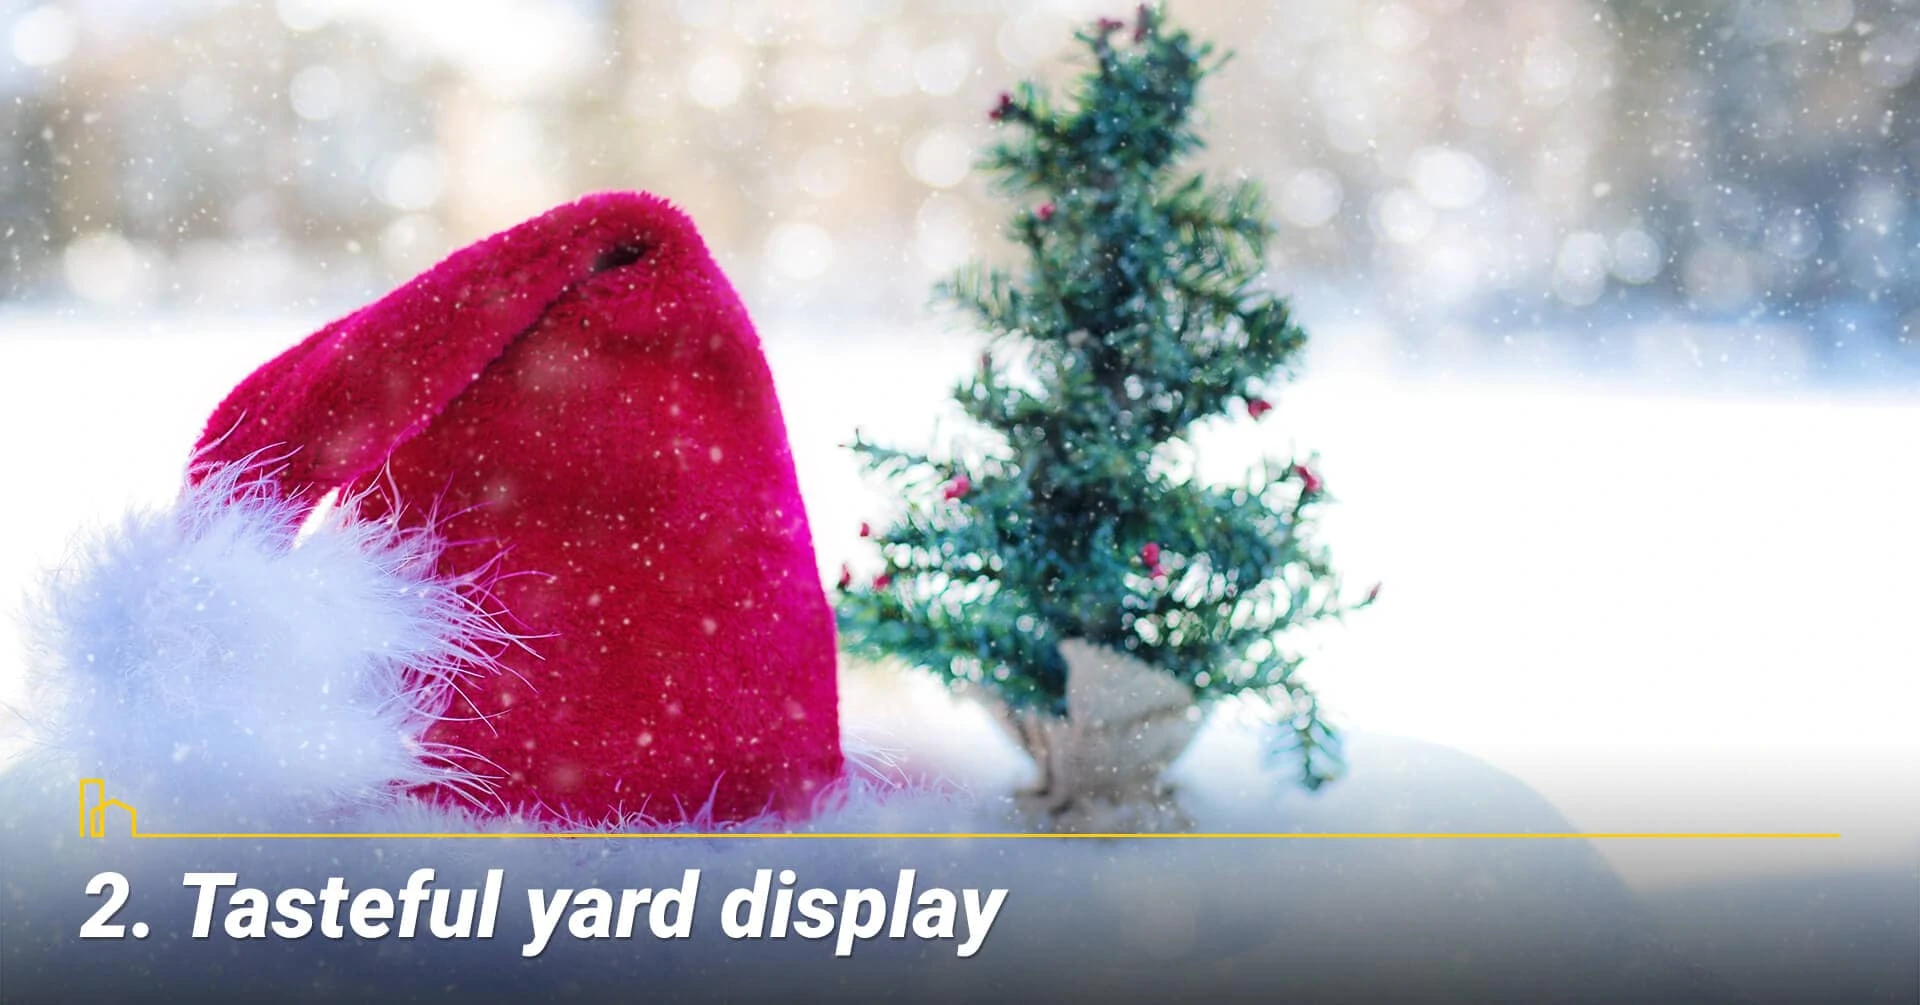 Tasteful yard display, dress up your front yard